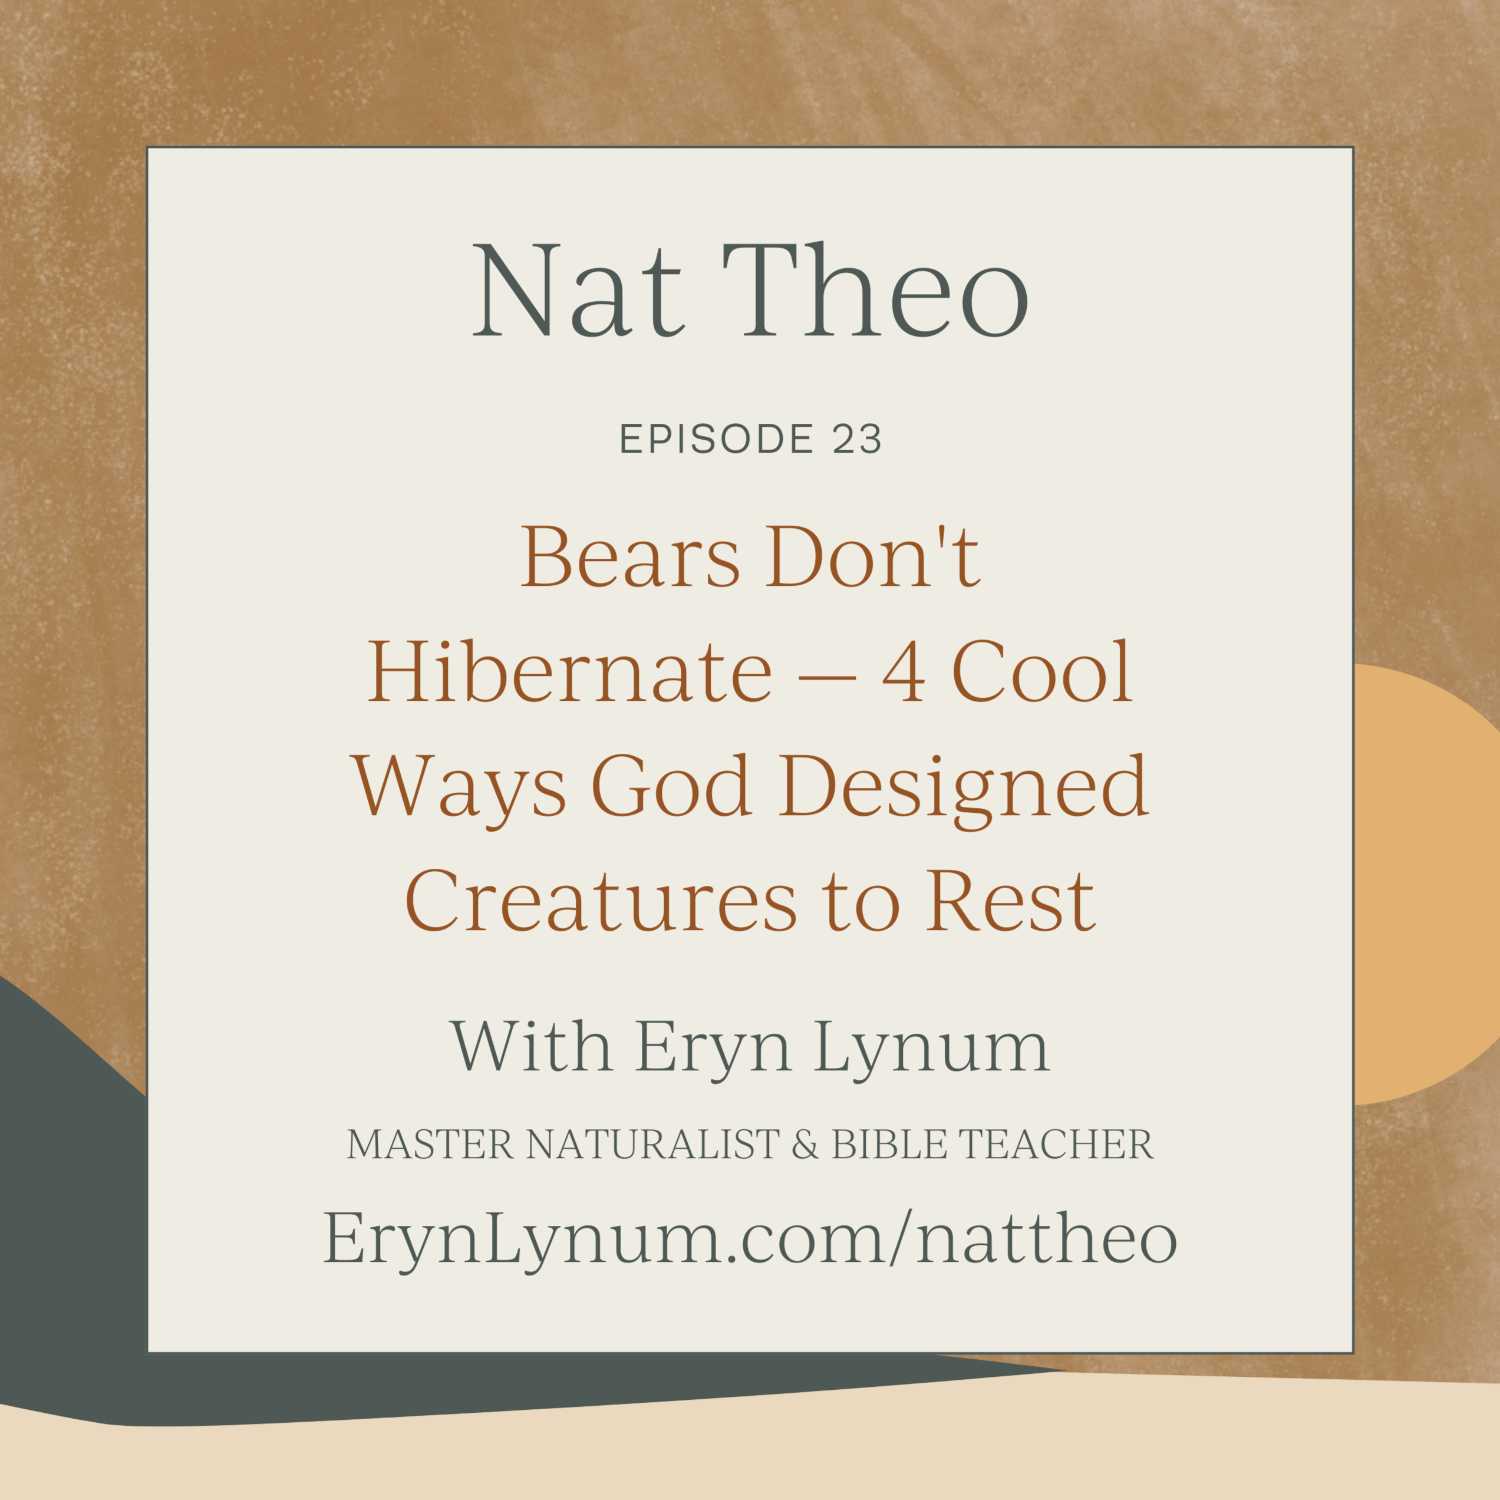 Bears Don't Hibernate — 4 Cool Ways God Designed Creatures to Rest - Episode 23